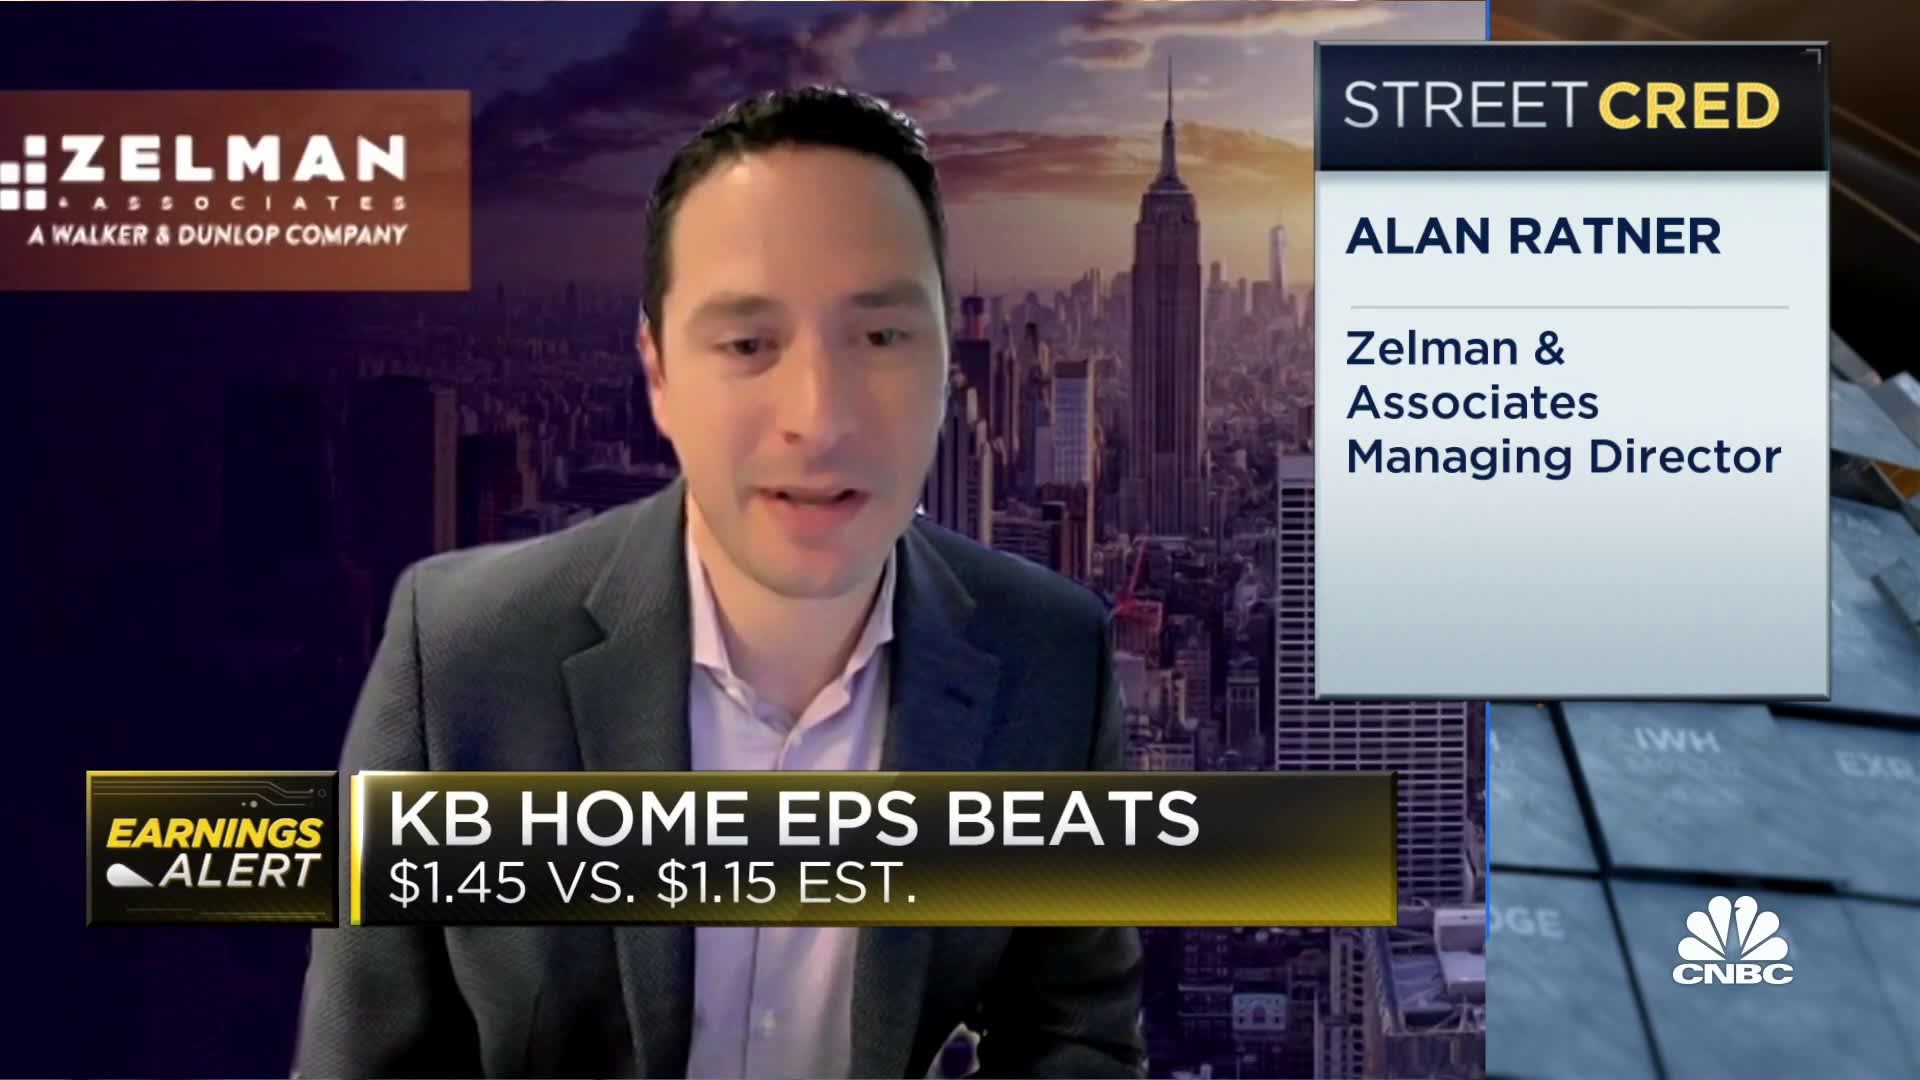 Zelman & Associates の Alan Ratner 氏は、住宅市場の安定化の兆しは確実に見られると述べています。